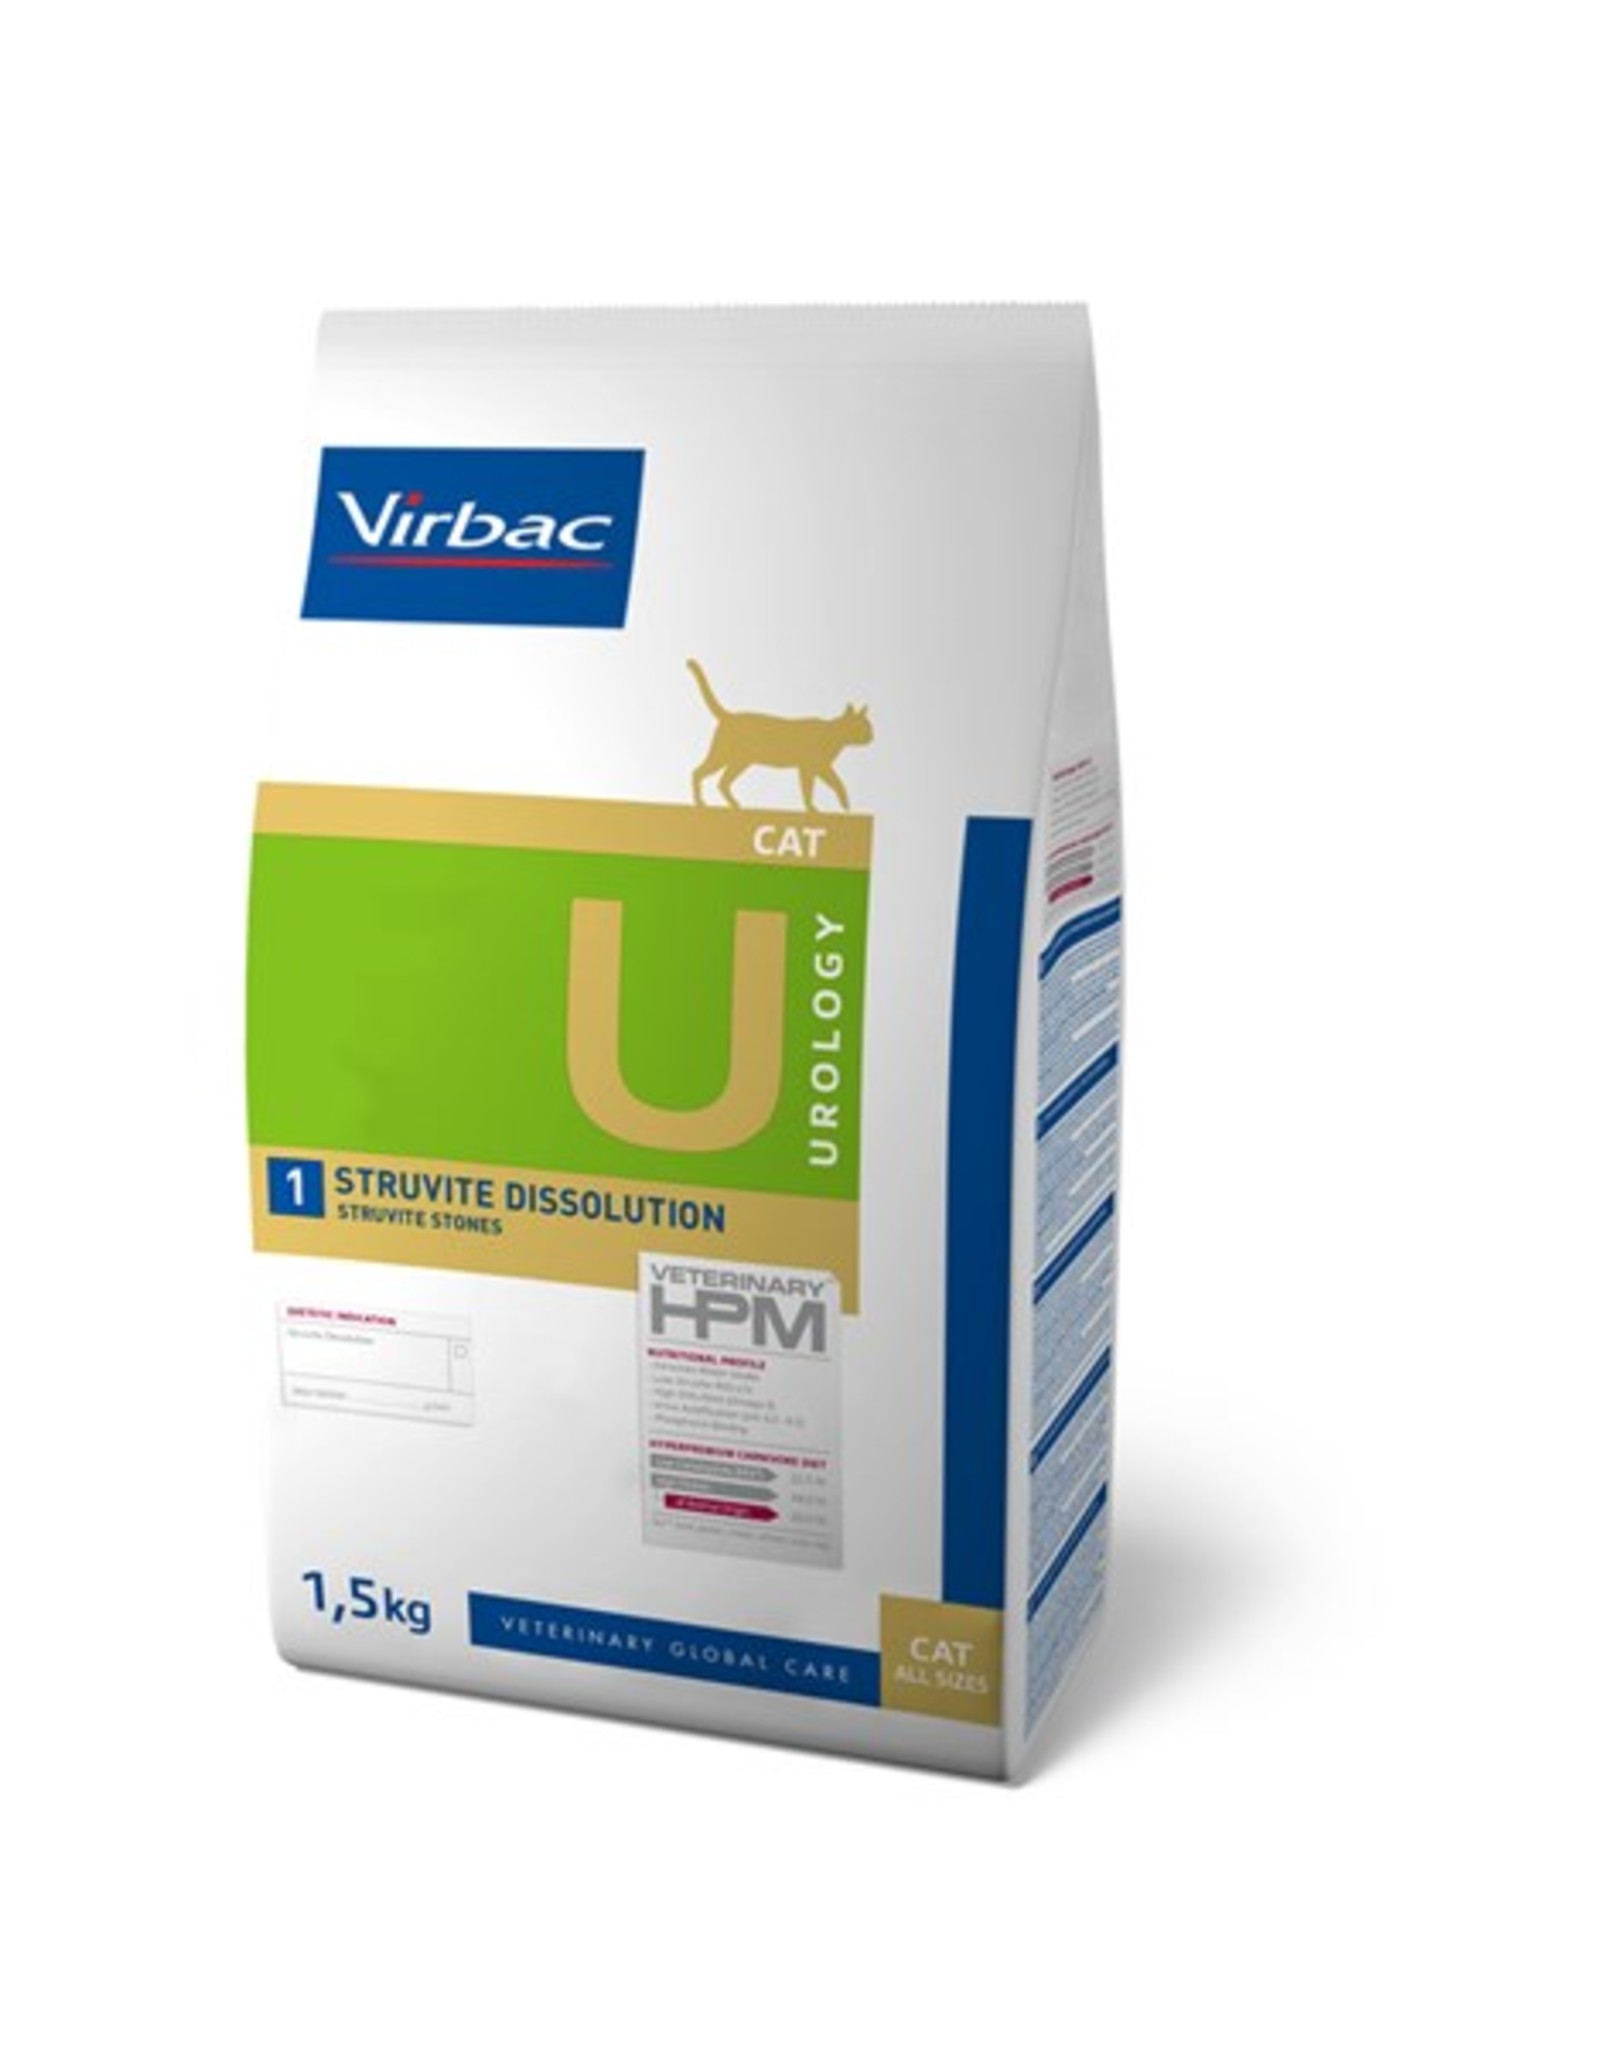 Virbac Virbac Hpm Katze Urology Struvite Dissolution U1 1,5kg